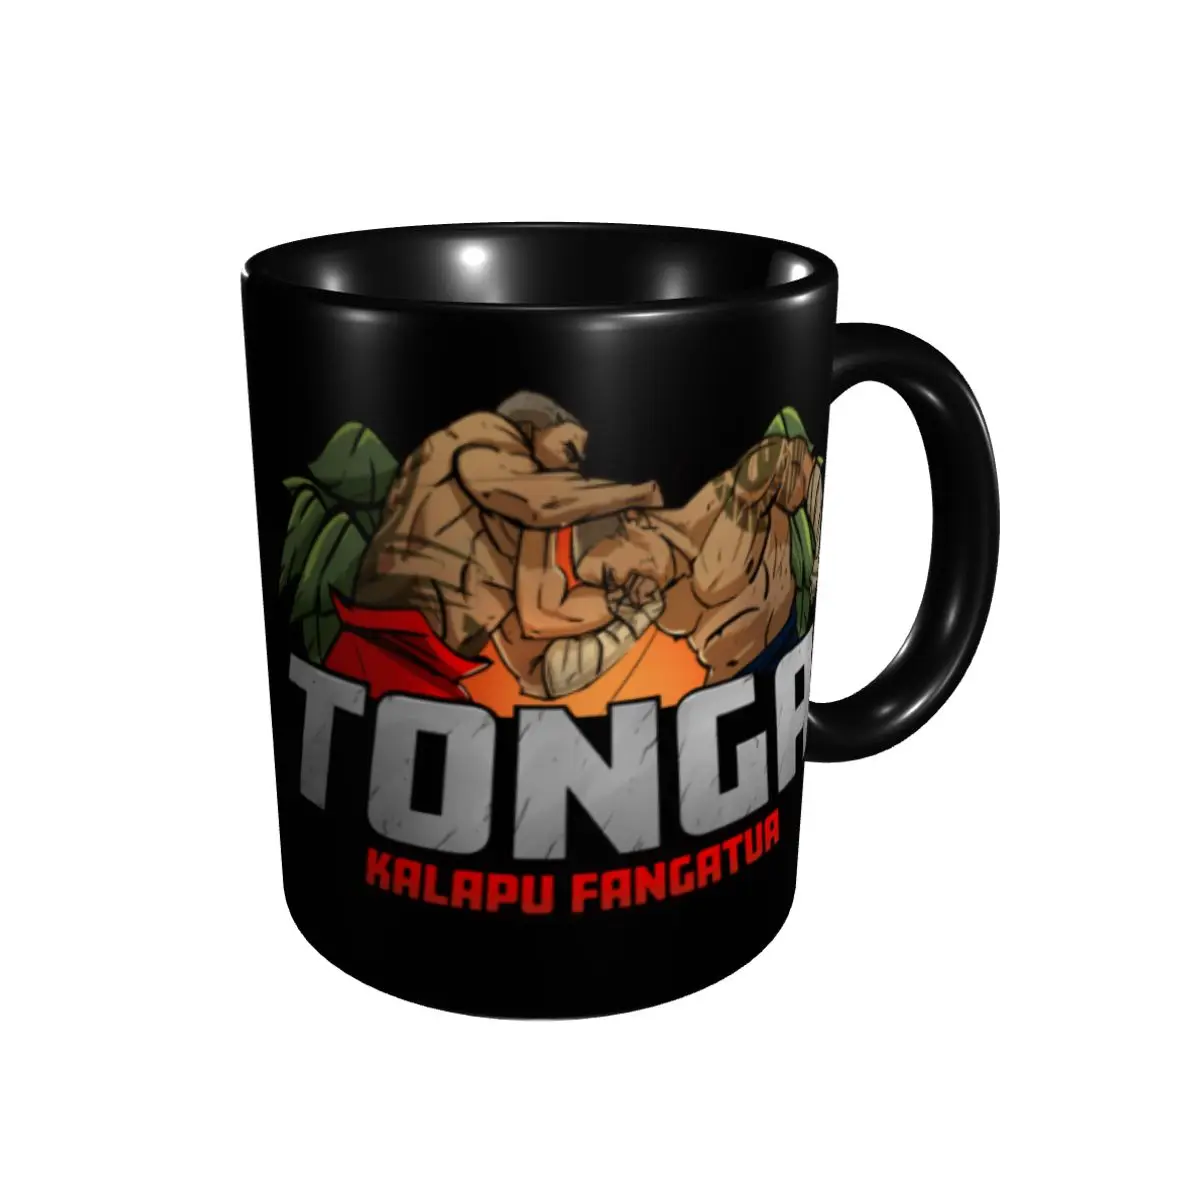 

Promo Tonga Volcano Kalapu And Fangatua Tonga Mugs Unique Cups Mugs Print Humor Graphic Volcanoes beer mugs